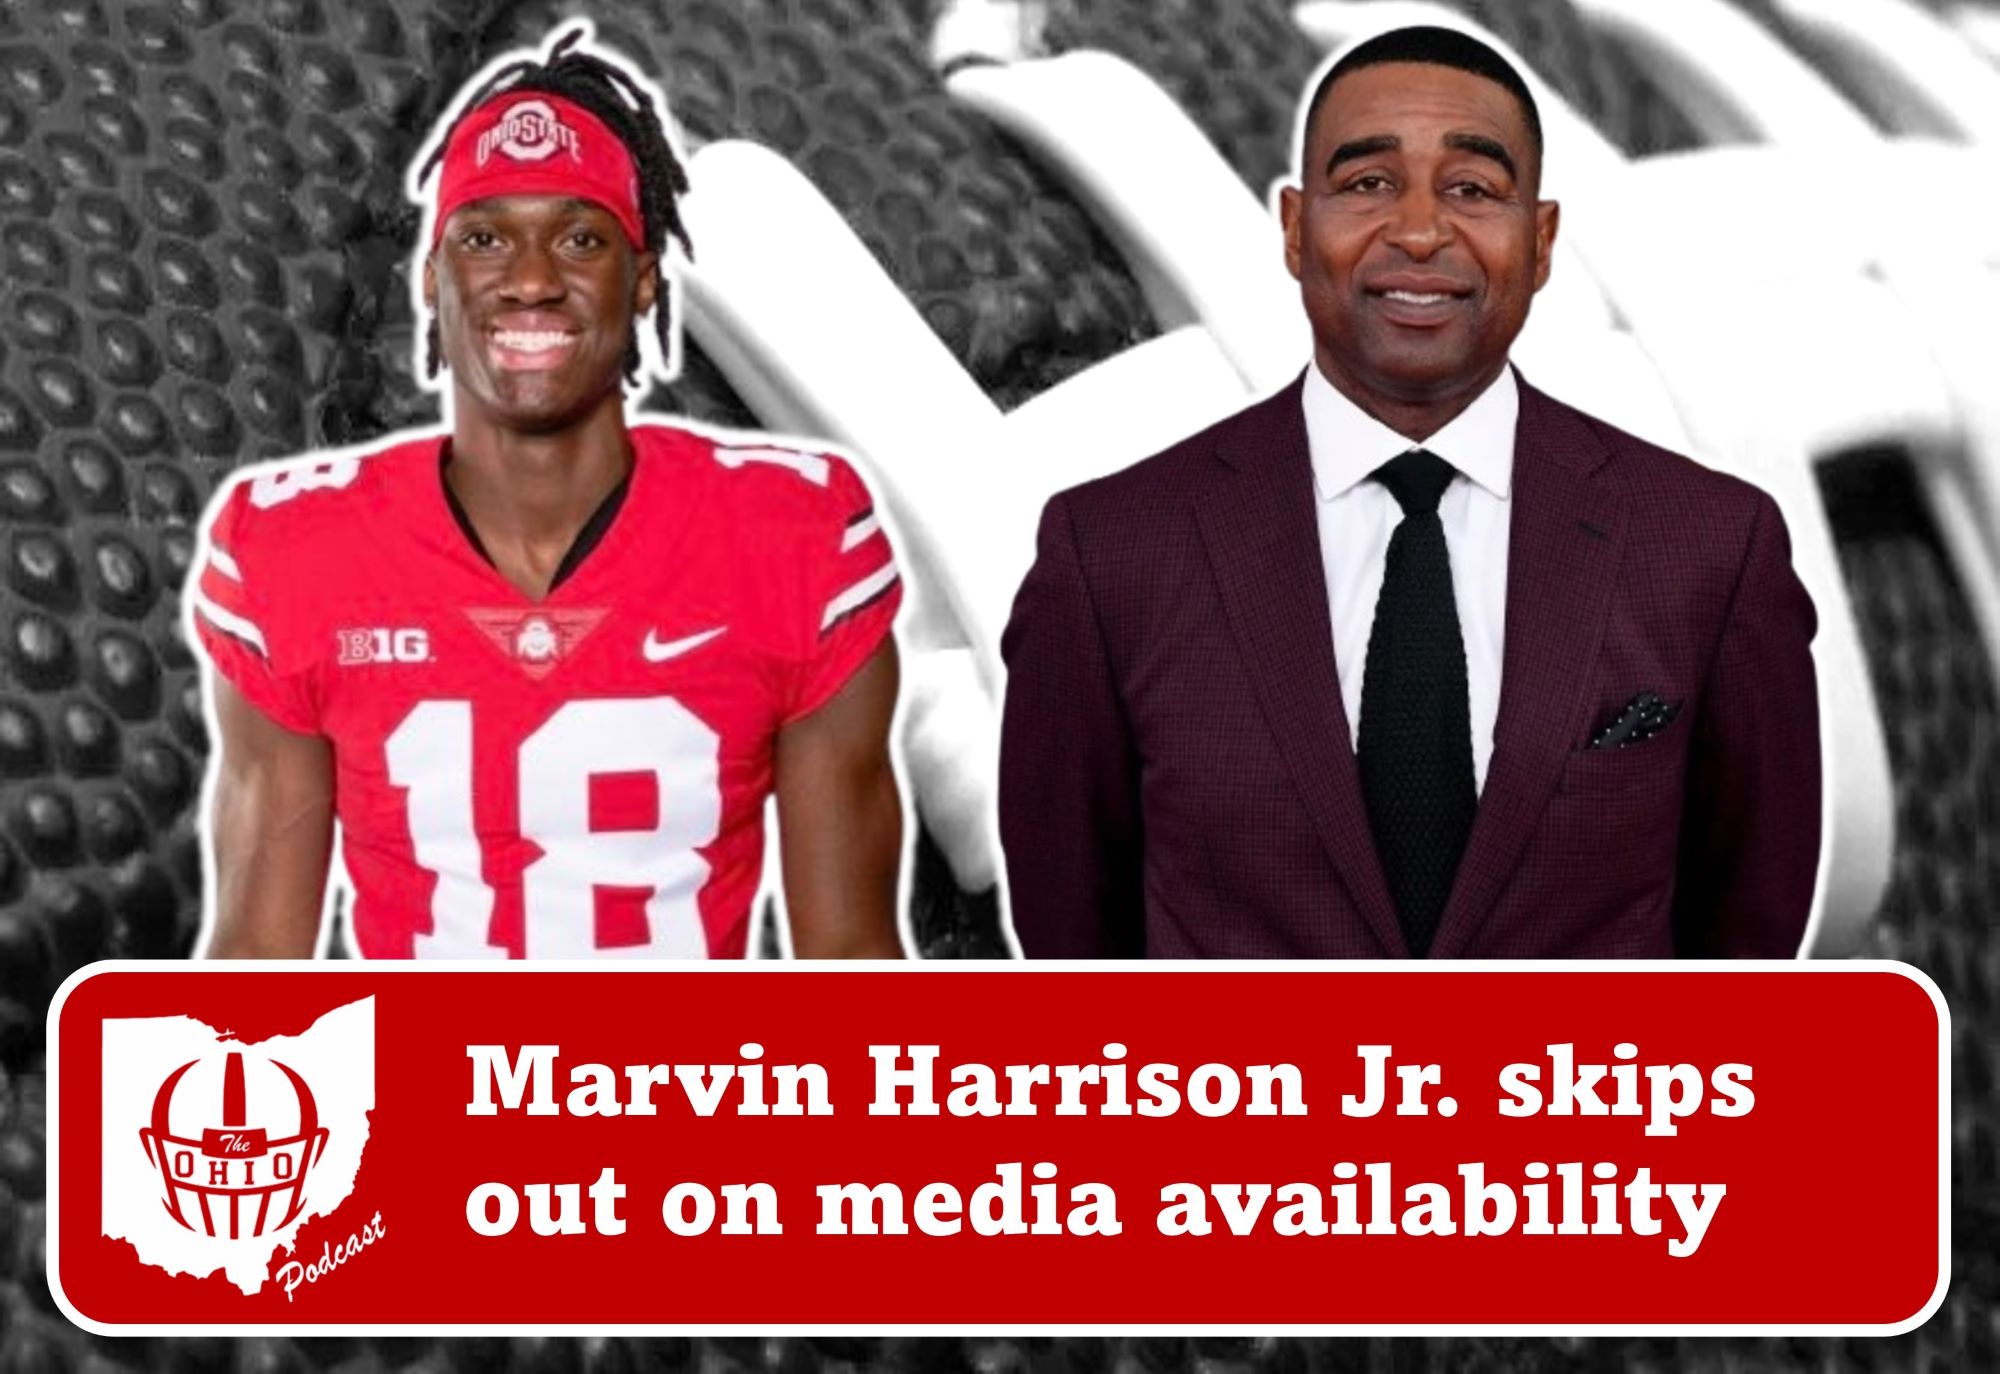 Marvin Harrison Jr.’s Combine: Controversial or Strategic